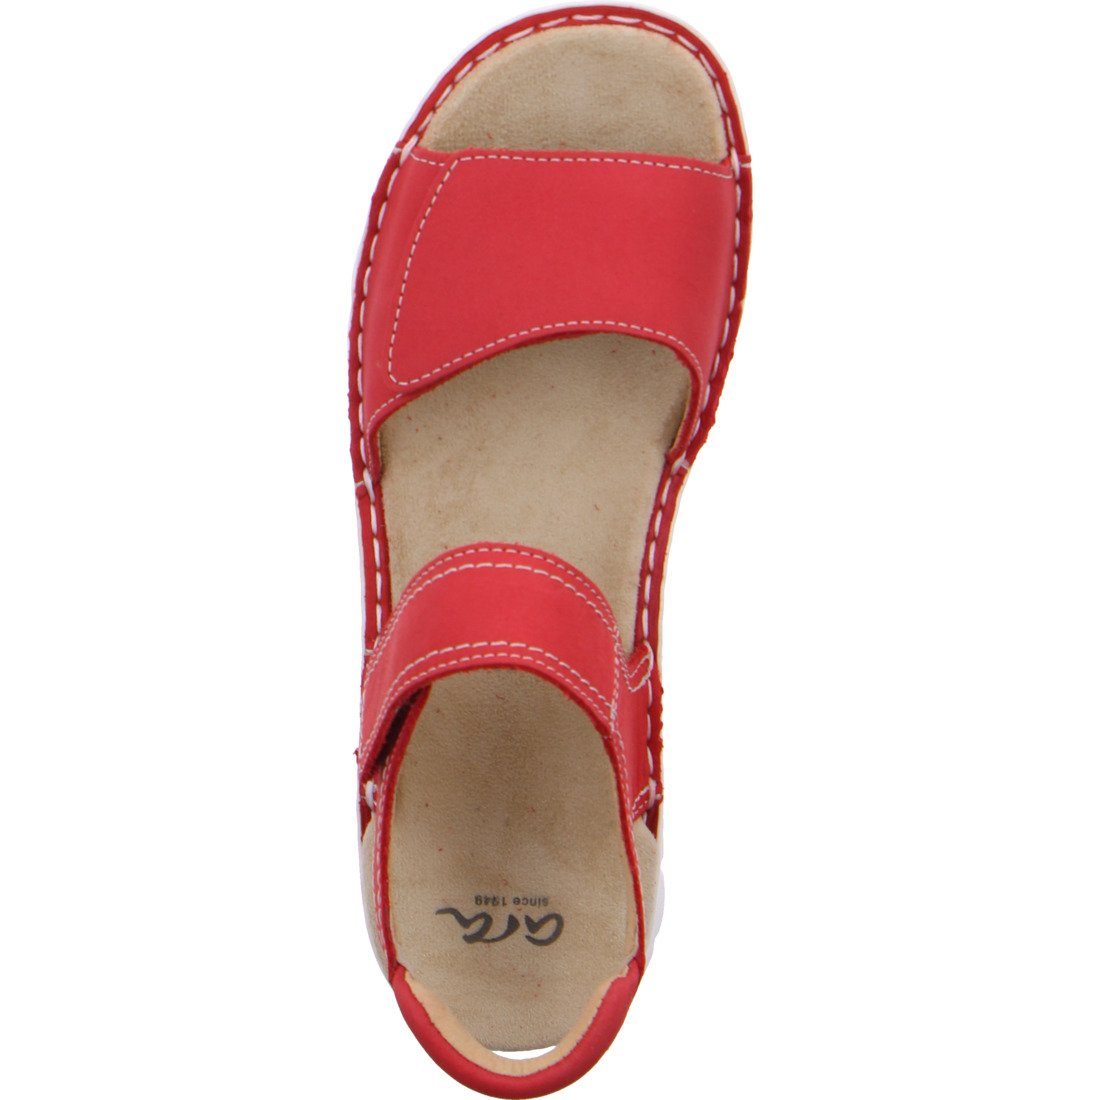 Damen 048263 Ara beige Tampa Ara - Sandalette Sandalette Schuhe, Leder